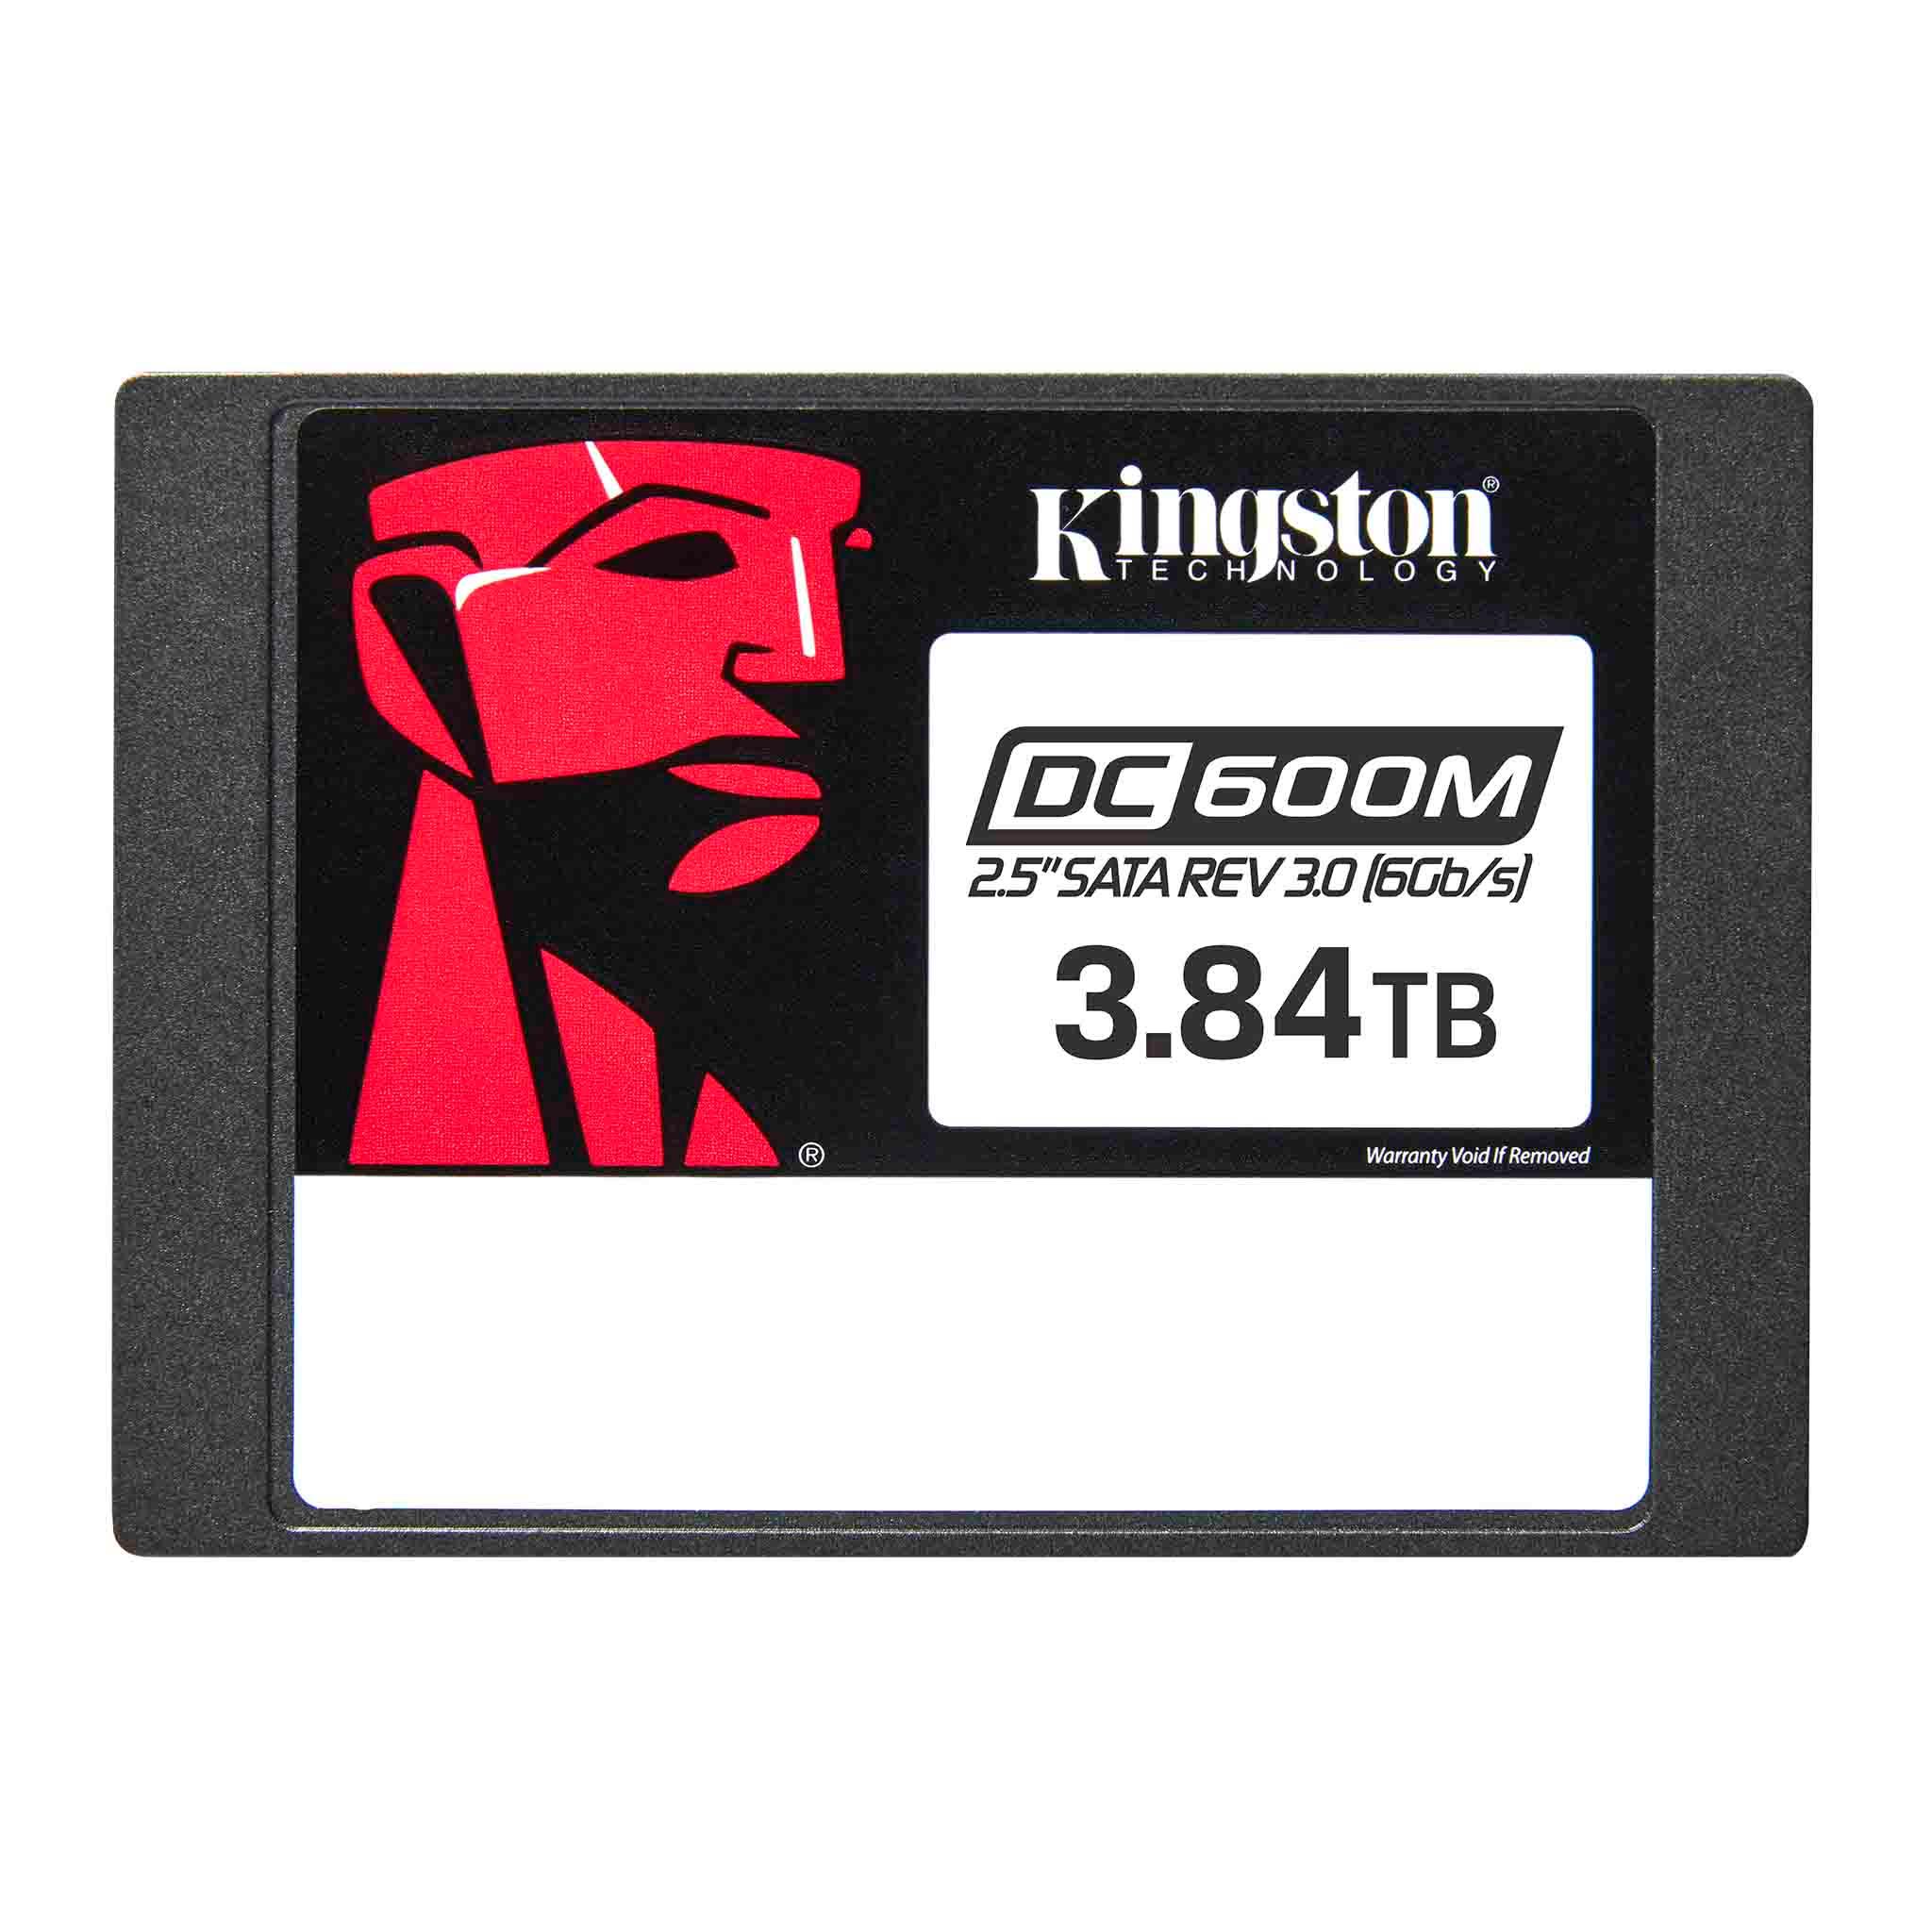 SSD Kingston Enterprise 3840G DC600M 2.5" SATA 3,84 TB - SEDC600M/3840G - Mega Market